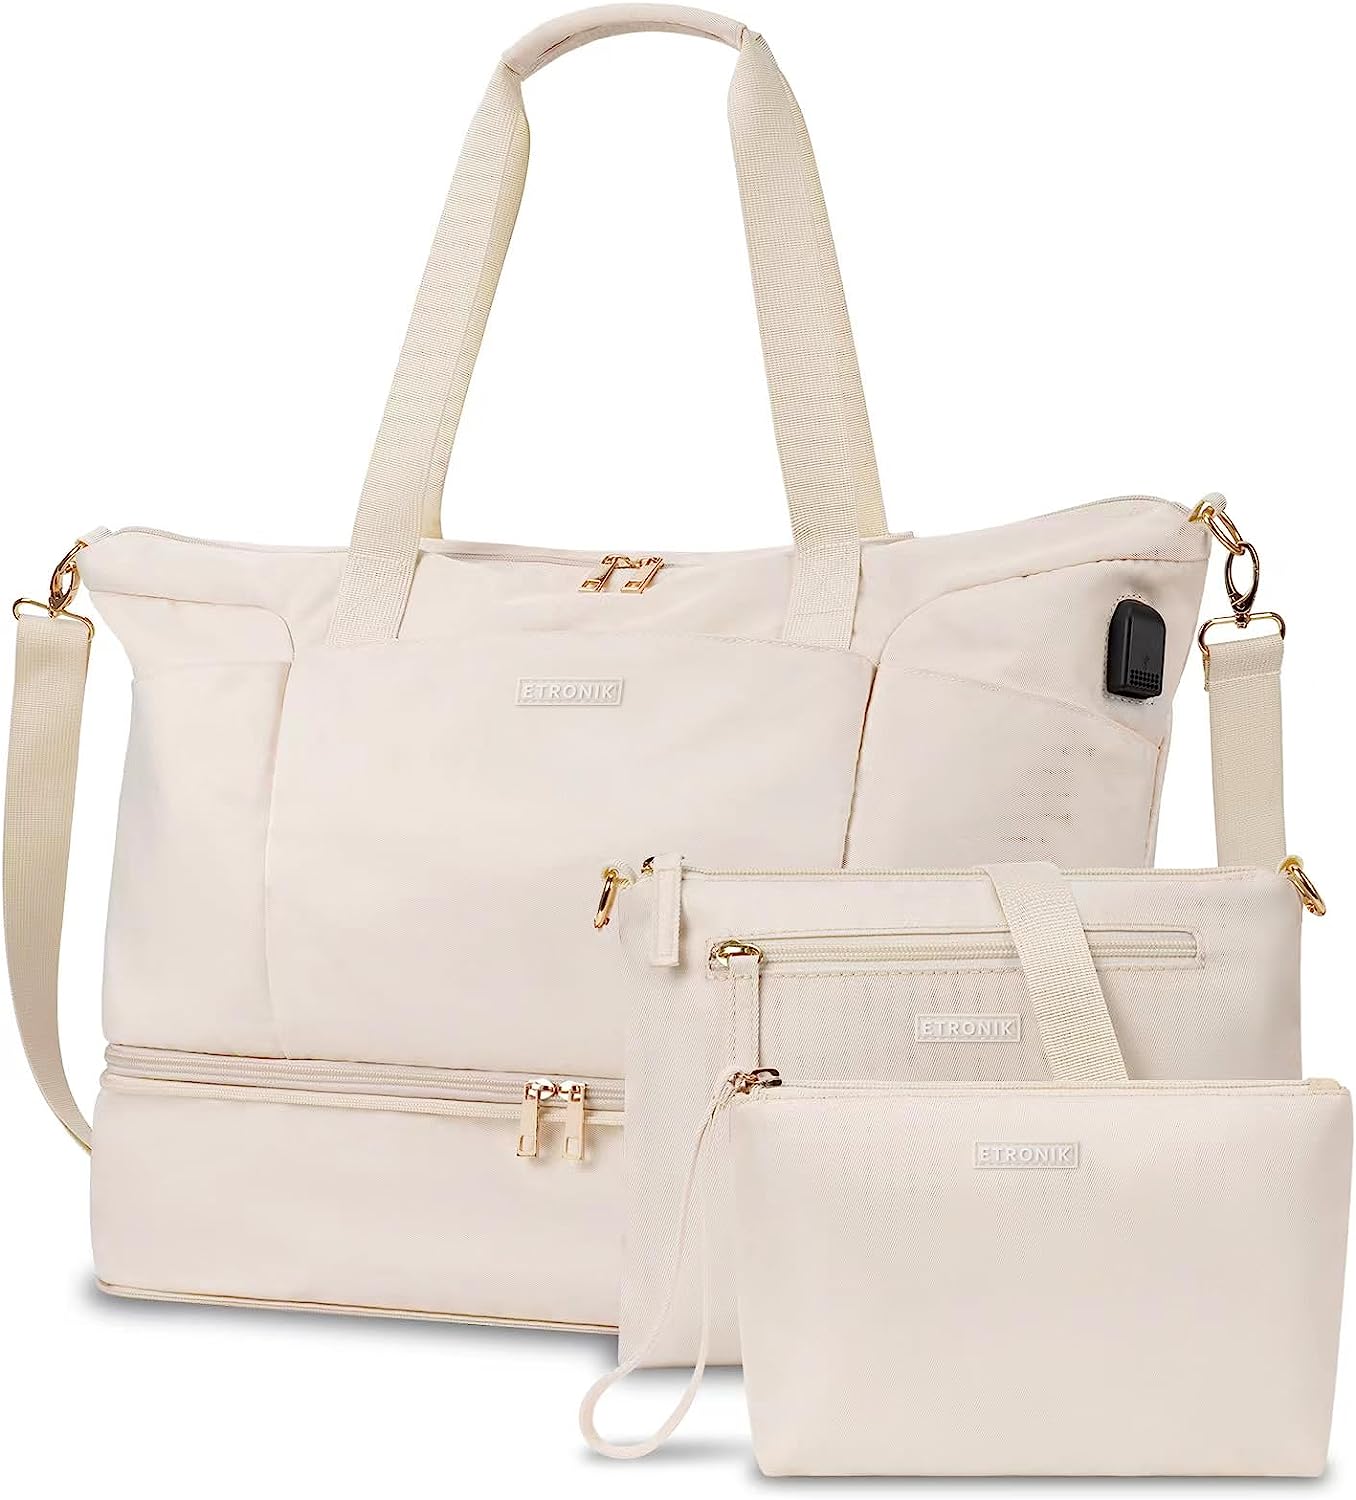 ETRONIK Weekender Bag for Women, Expandable Travel [...]